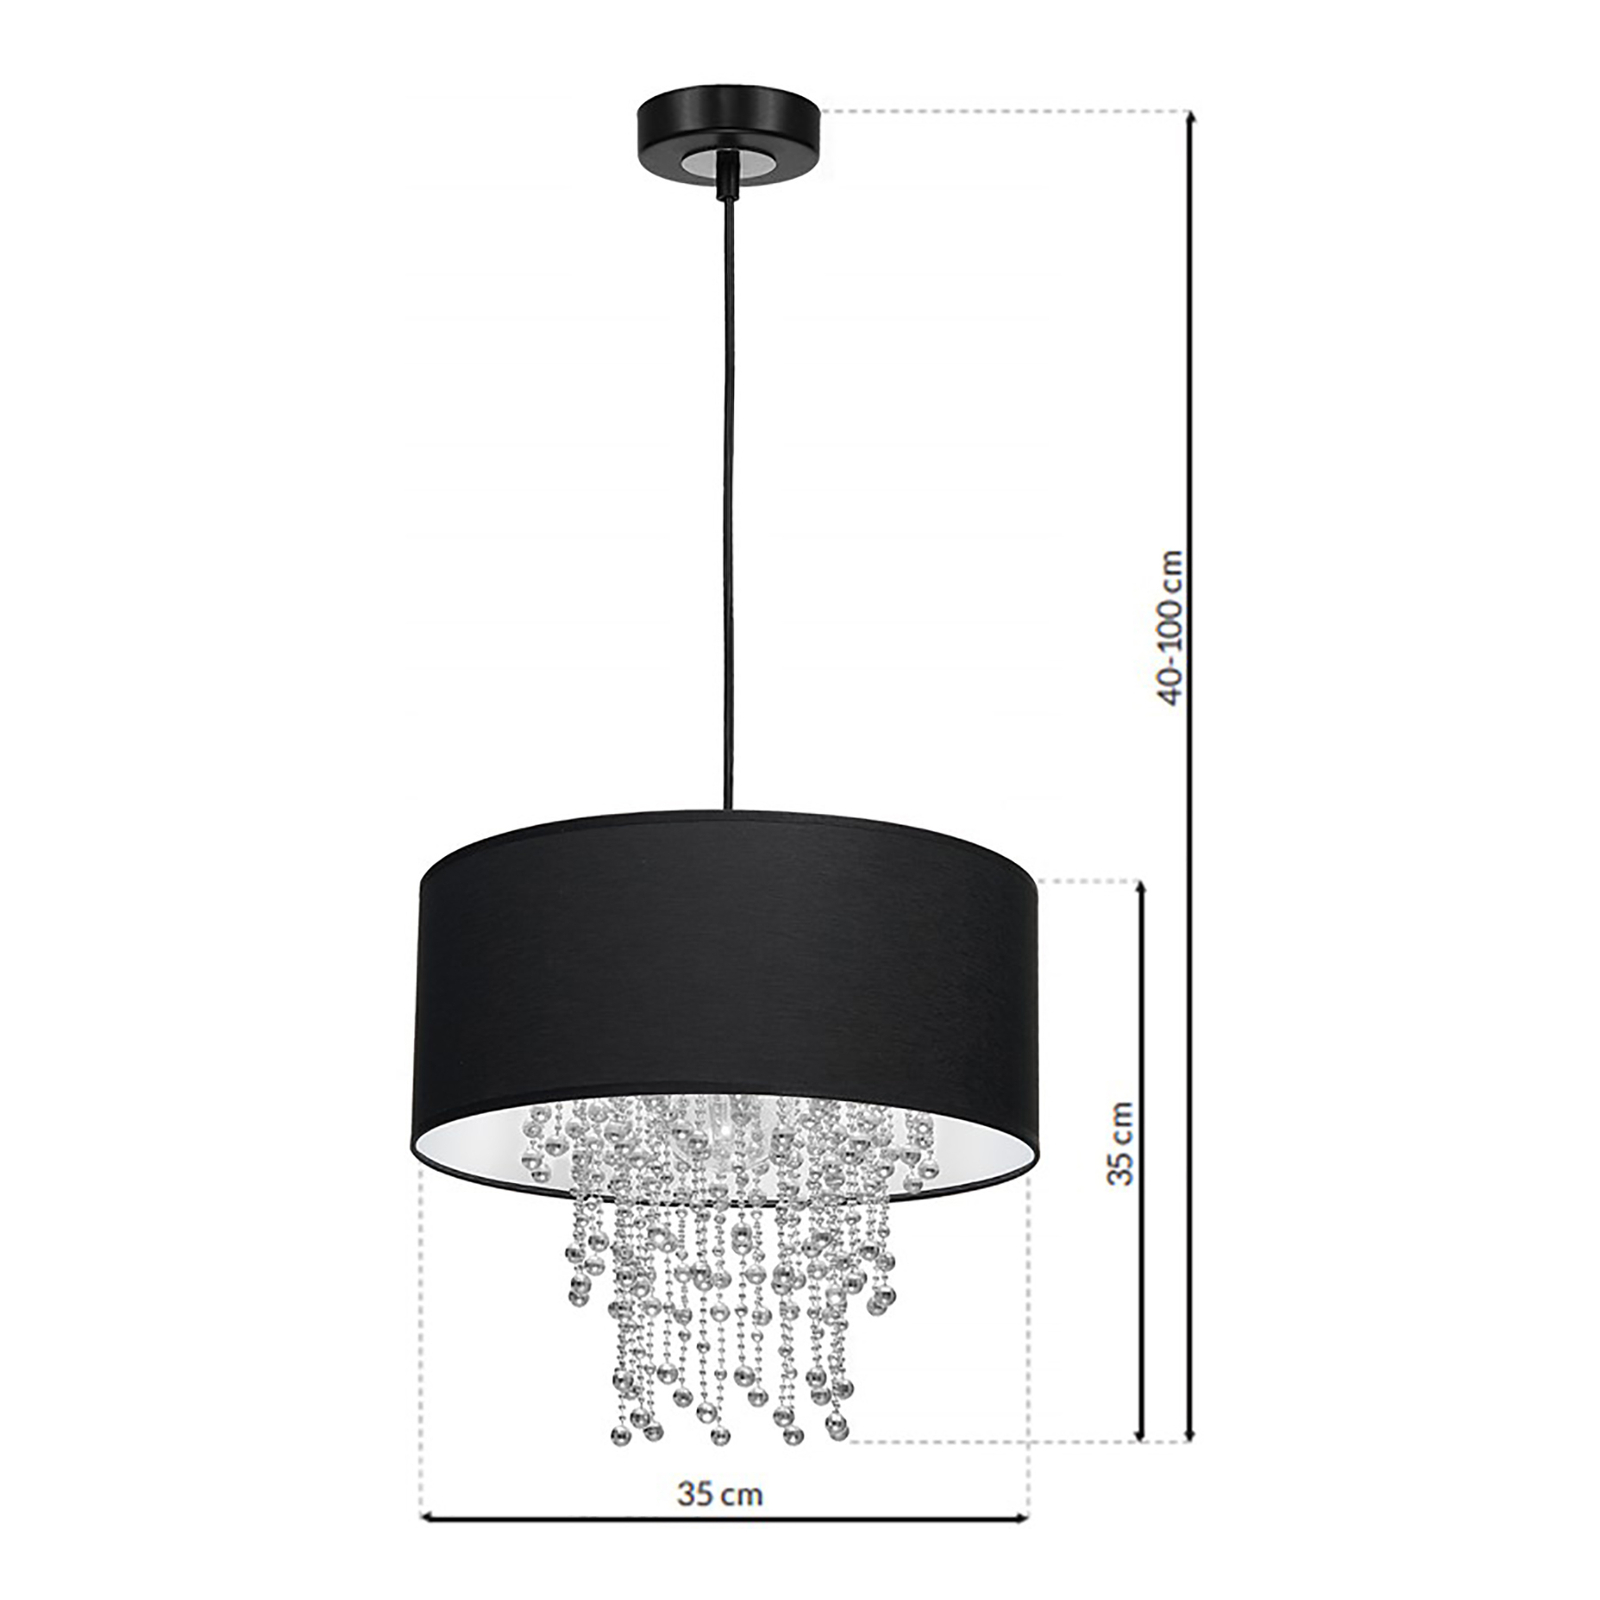 Hanglamp Almeria, zwart/chroom